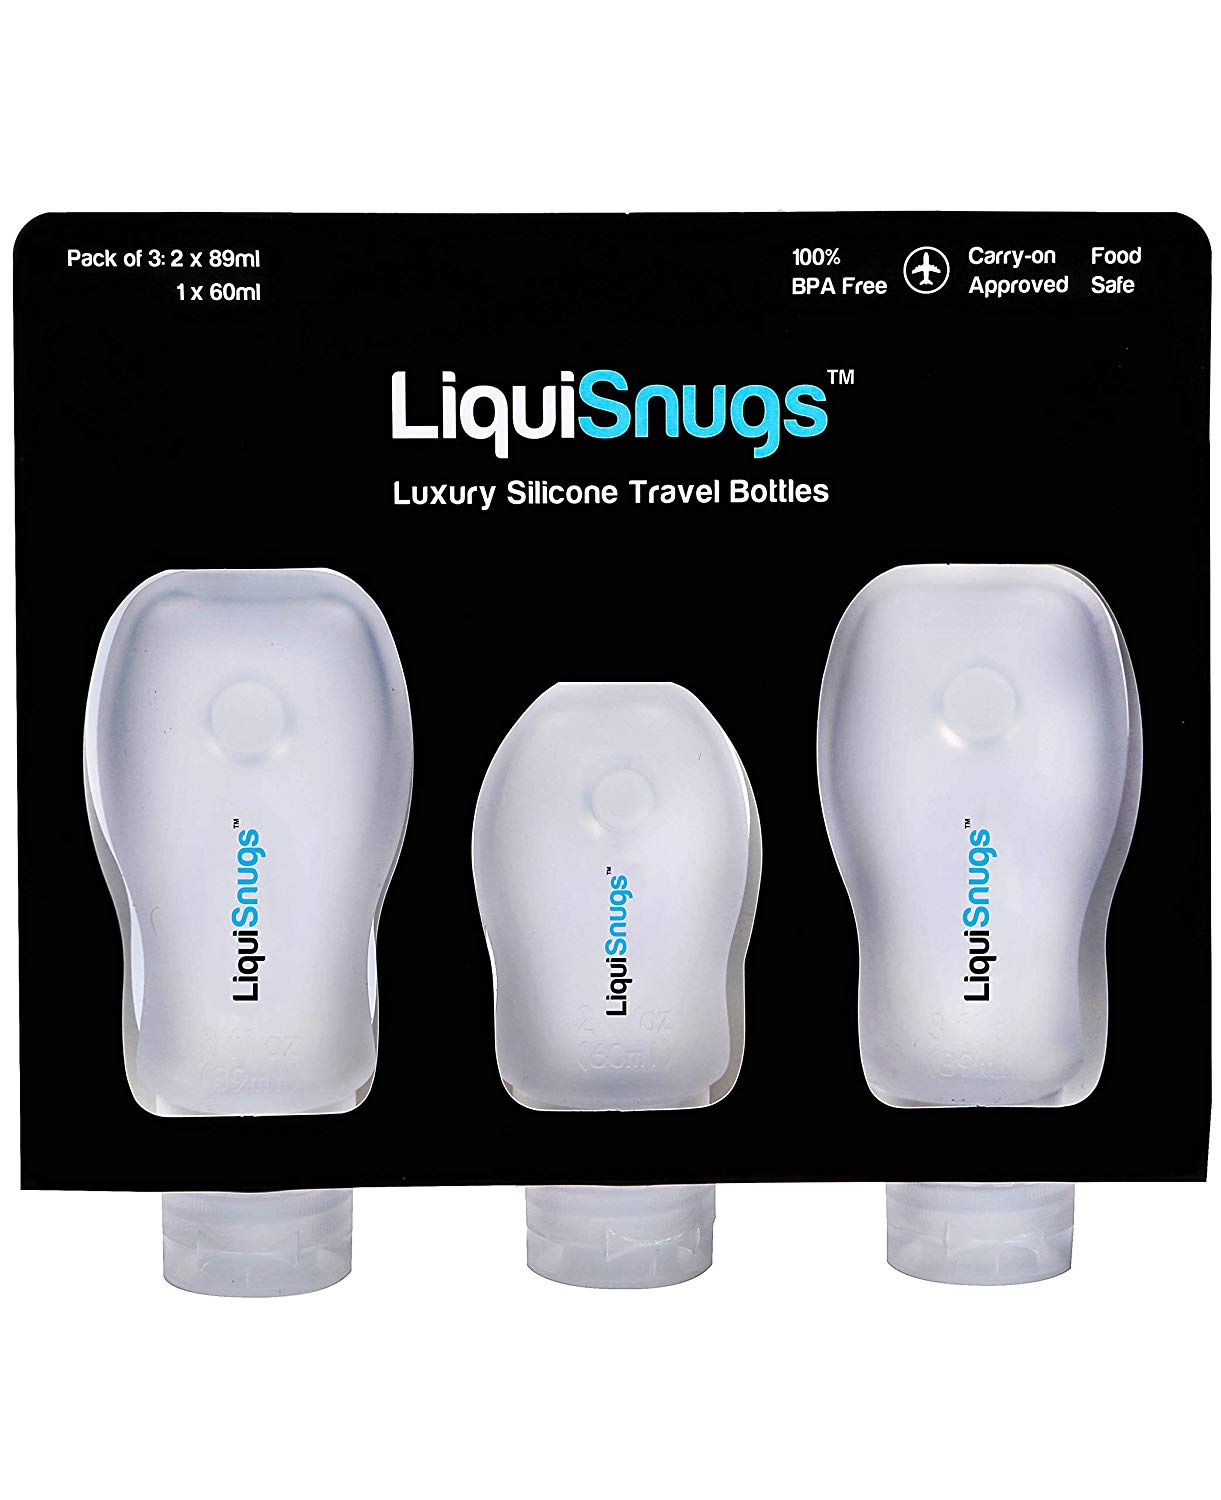 2. LiquiSnugs Silicone Travel Bottles